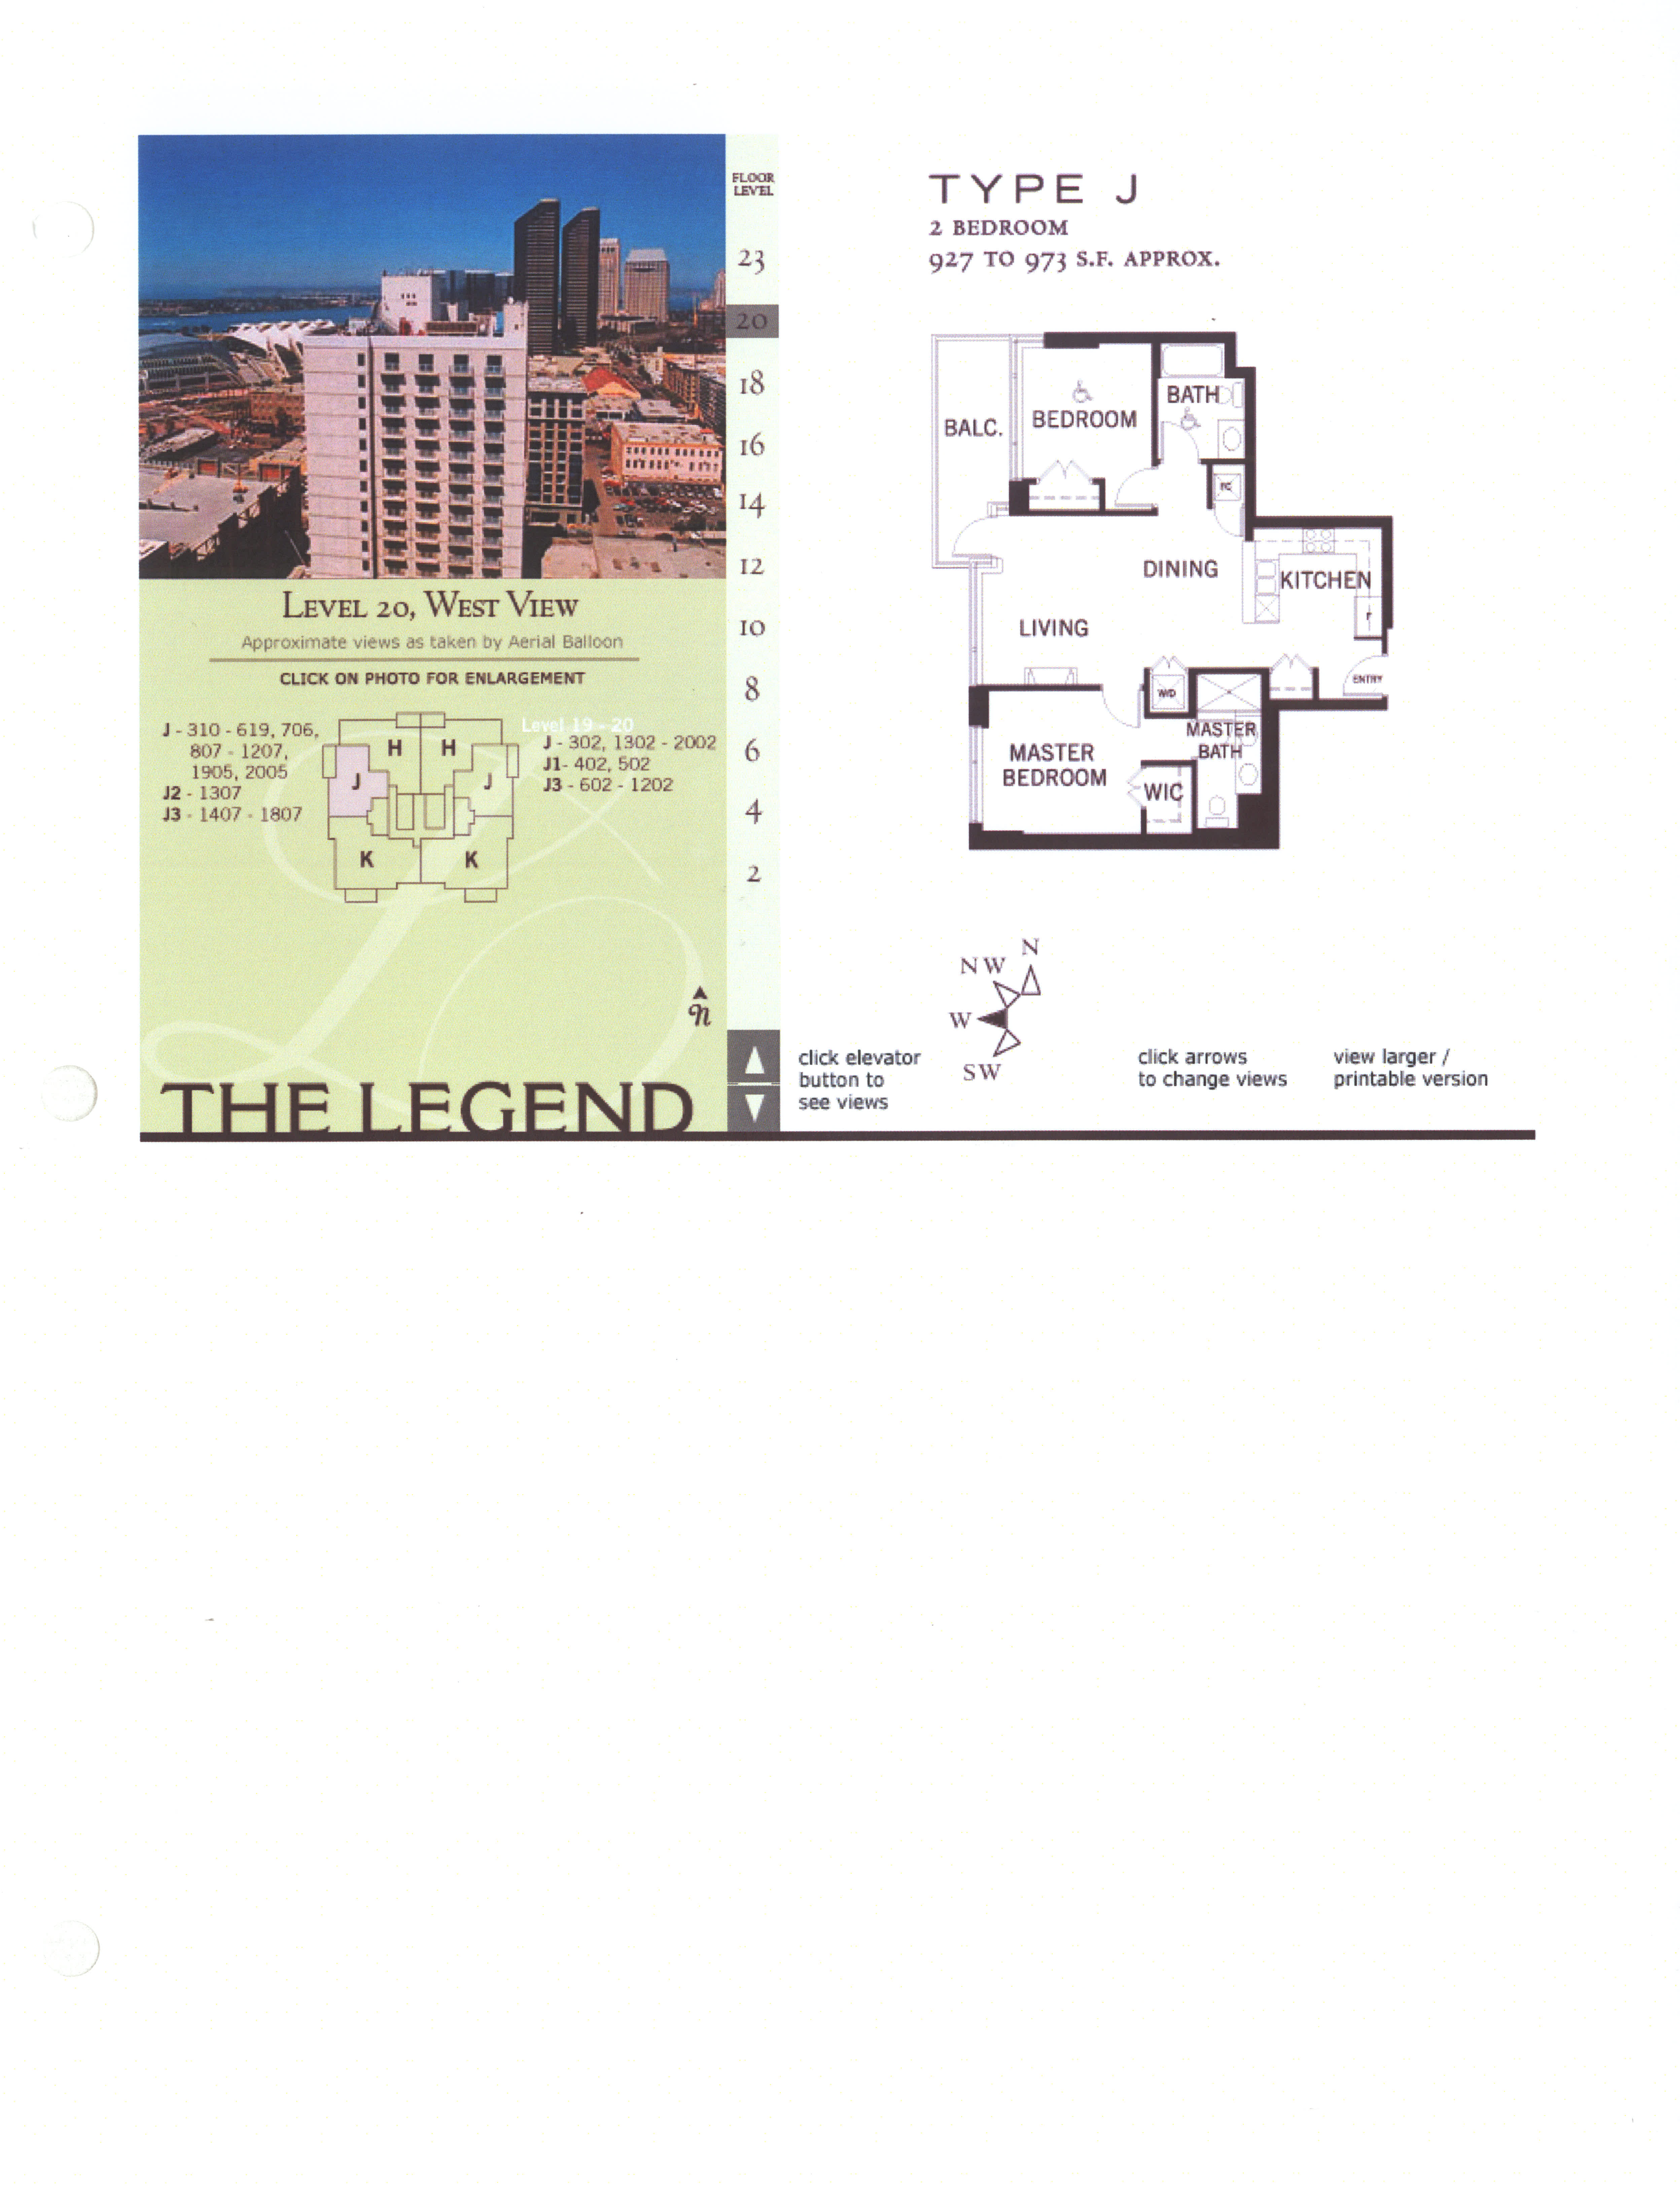 The Legend Floor Plan Level 20, West View – Type J